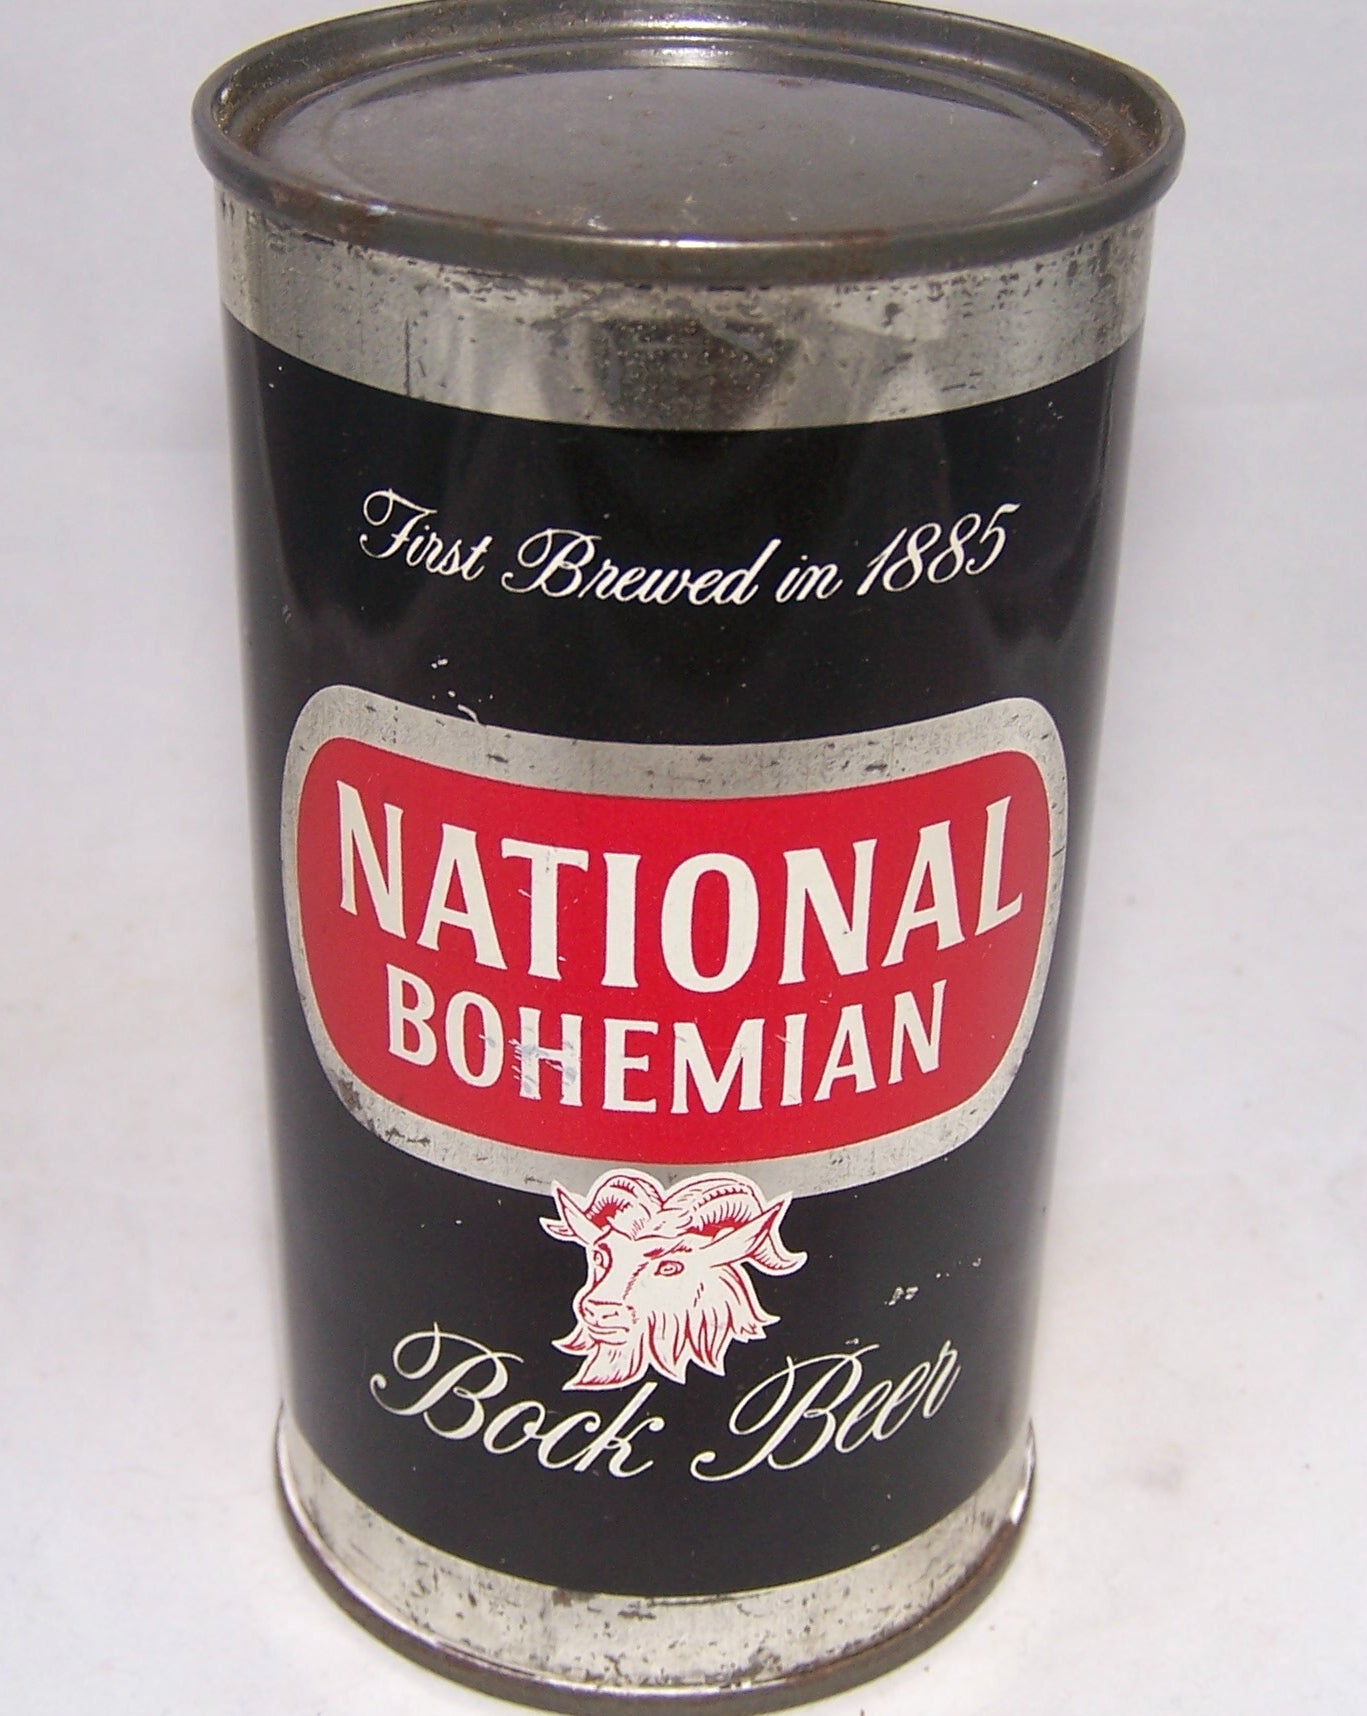 National Bohemian Bock Beer, USBC 102-19 Grade 1- Sold on 01/01/18